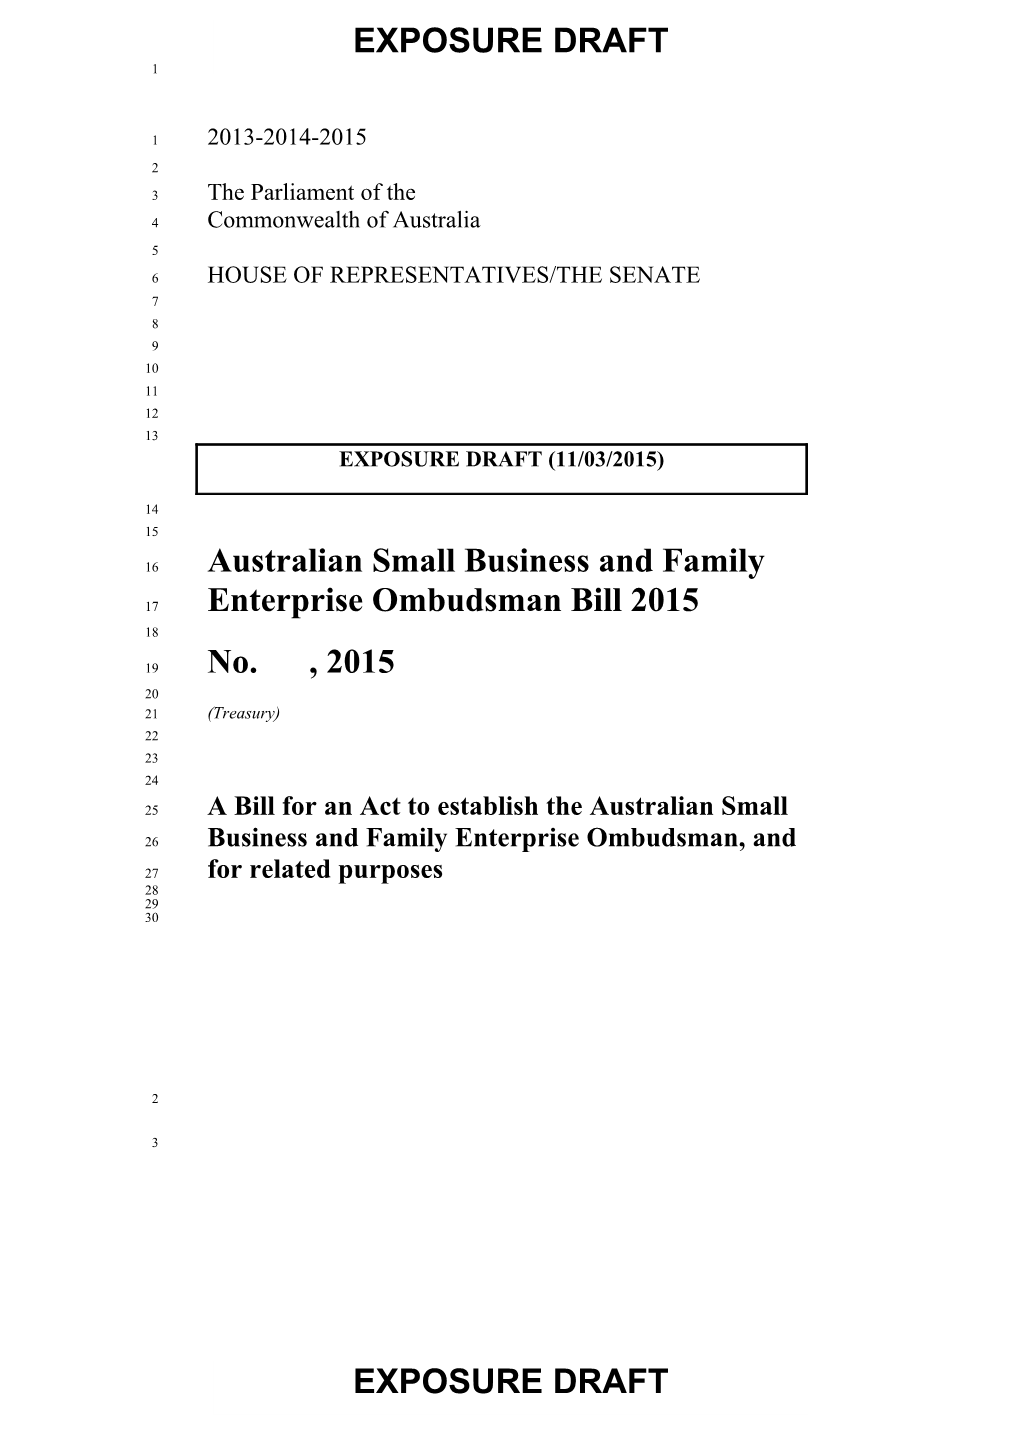 Exposure Draft Australian Small Business and Family Enterprise Ombudsman Bill 2015